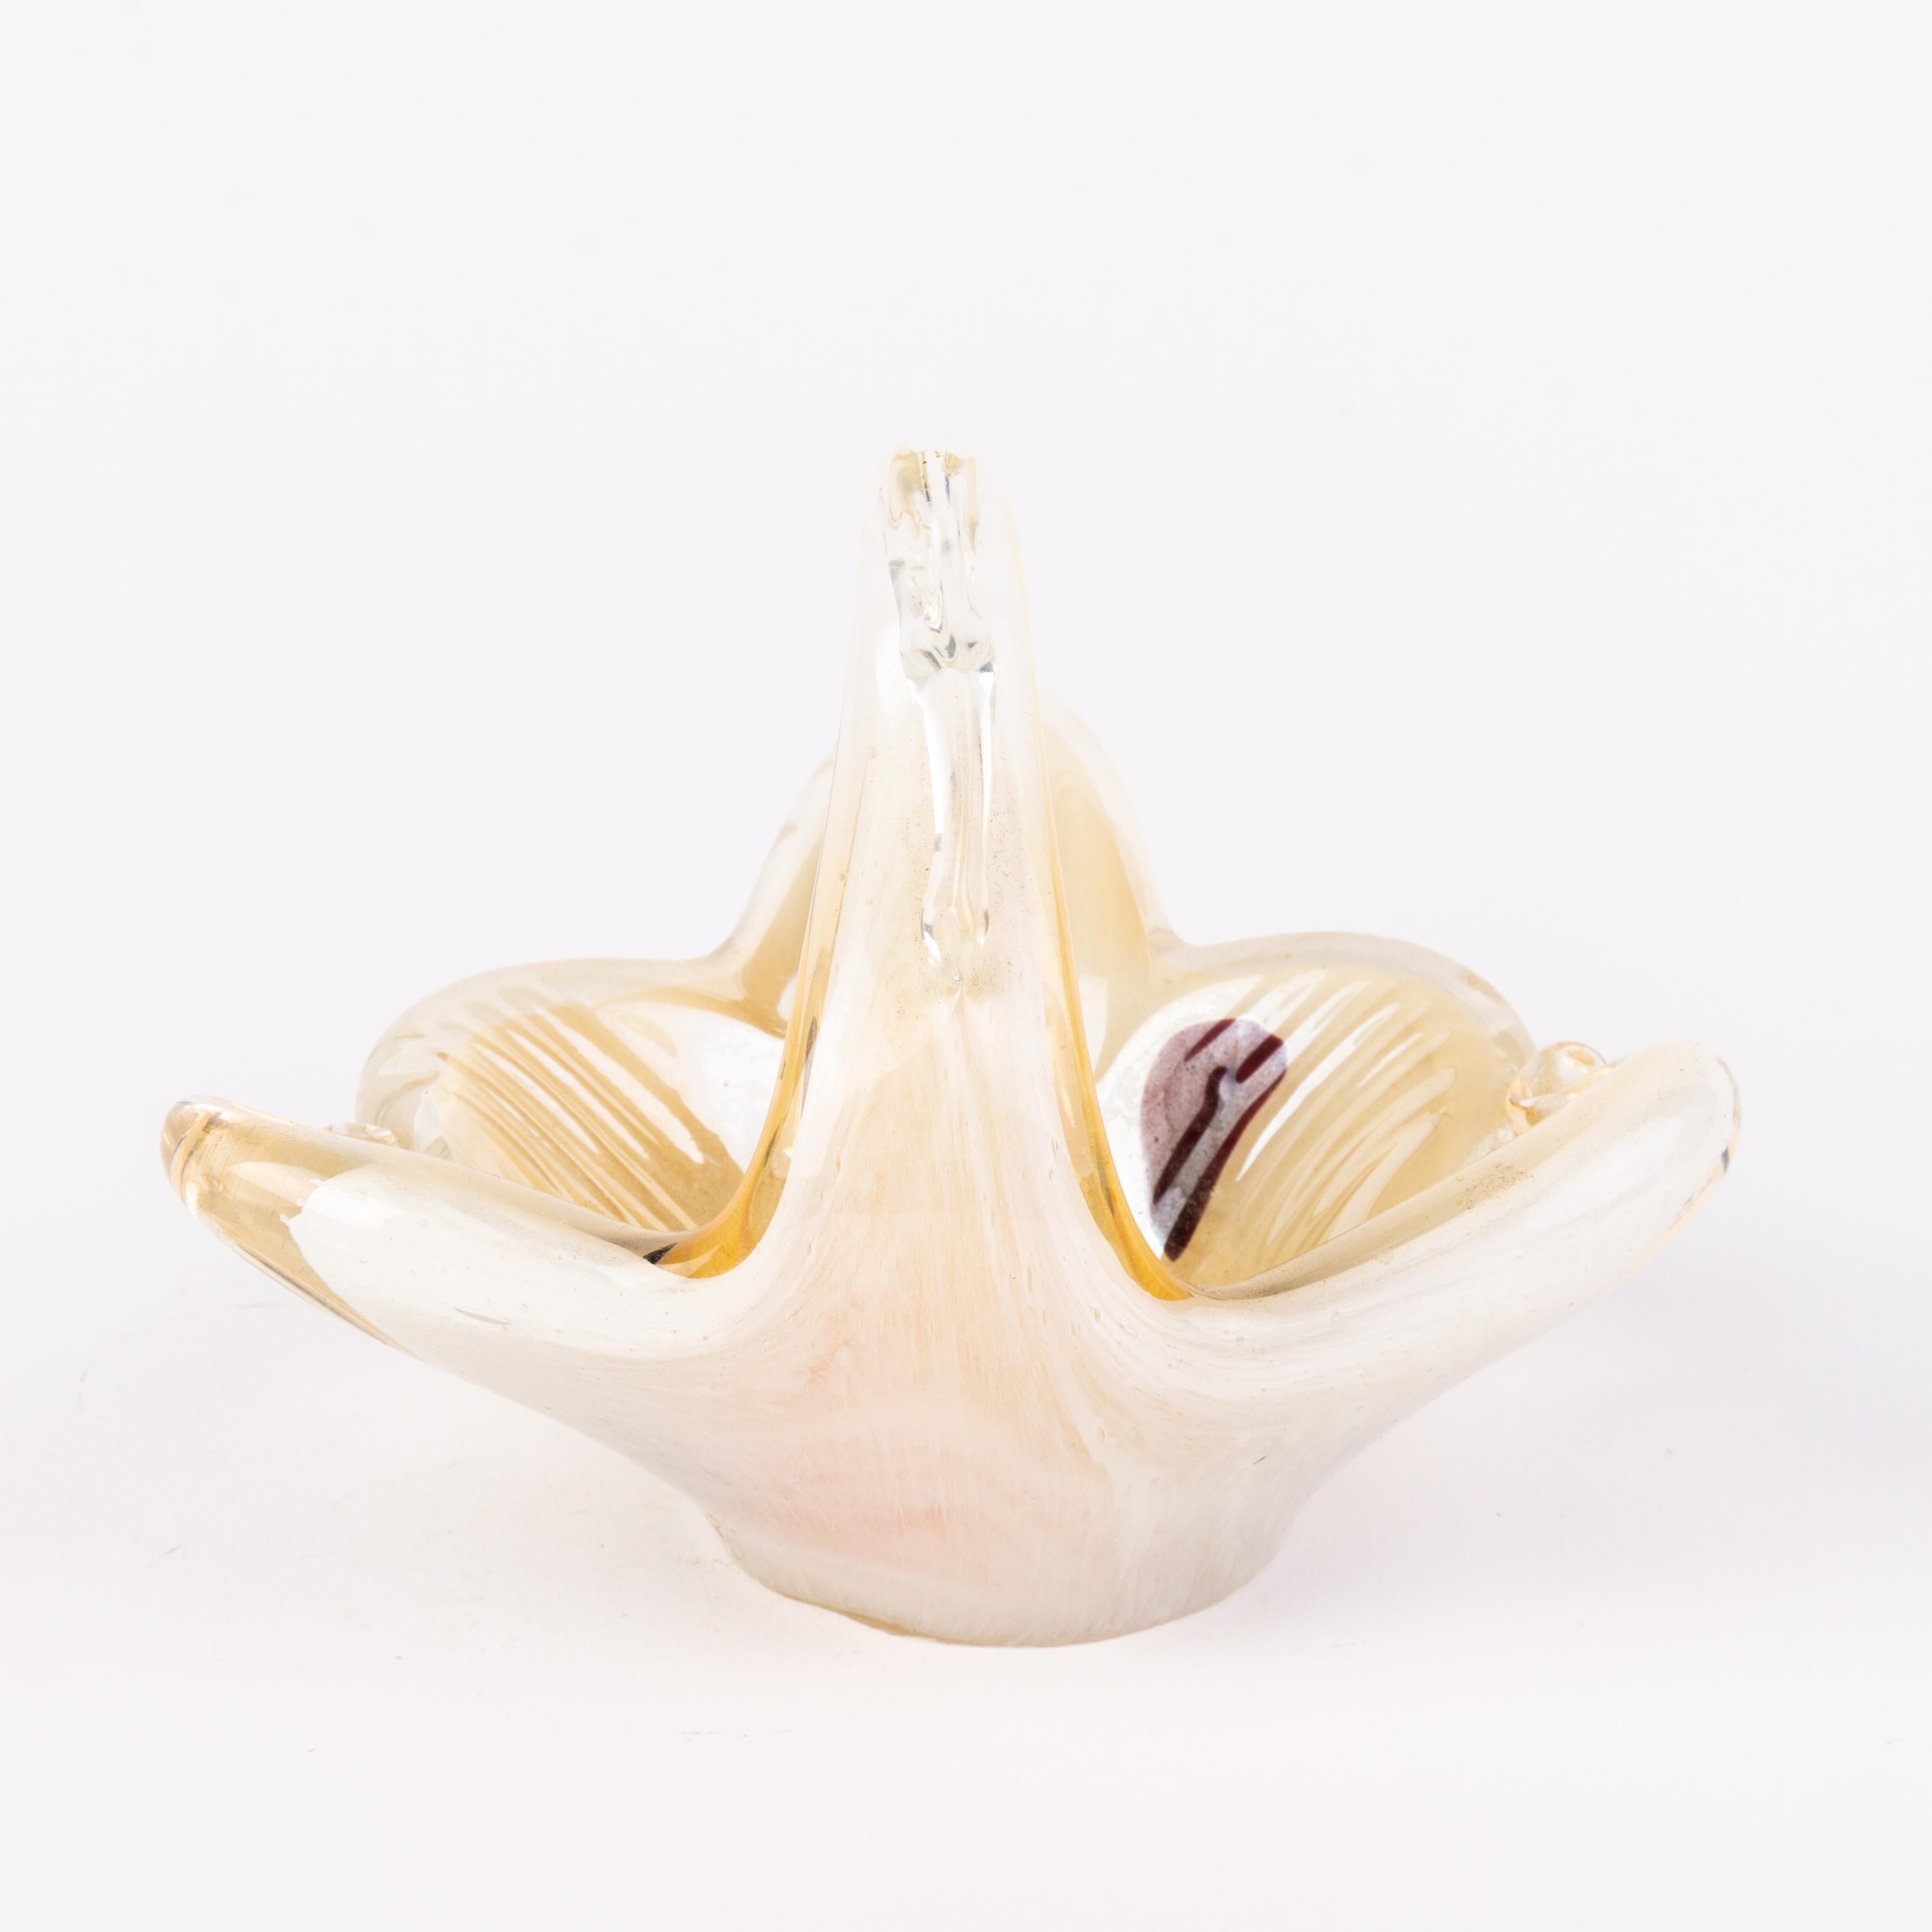 Murano Venetian Glass Sculpture Swan Ashtray 
Good condition
Free international shipping.